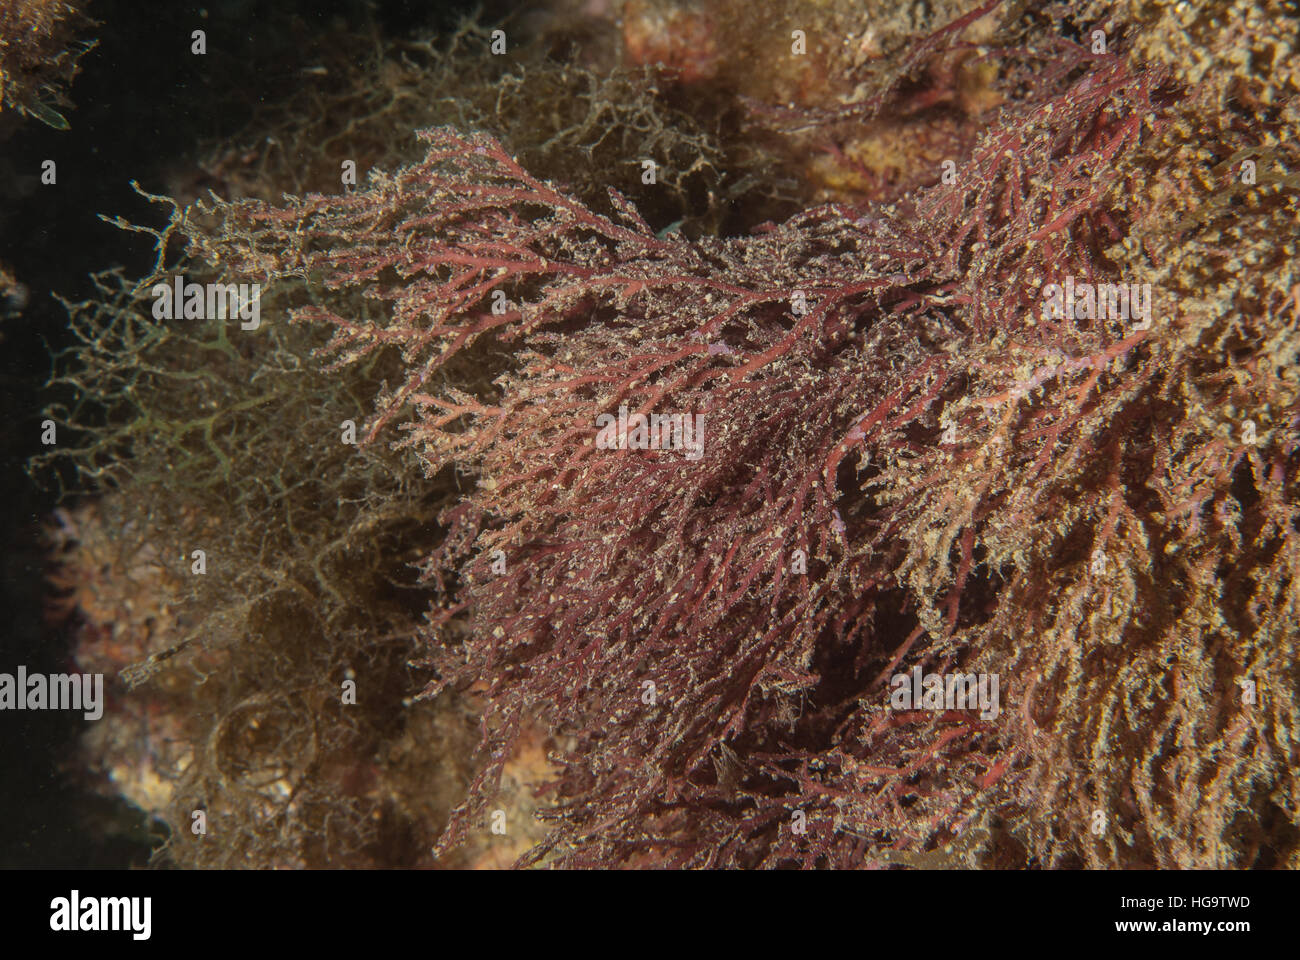 Amphiroa cryptarthrodia(sin. A. rubra), Lithophylloideae, Corallinales, Rhodophyta, Tor Paterno marine protected area, Italy Stock Photo